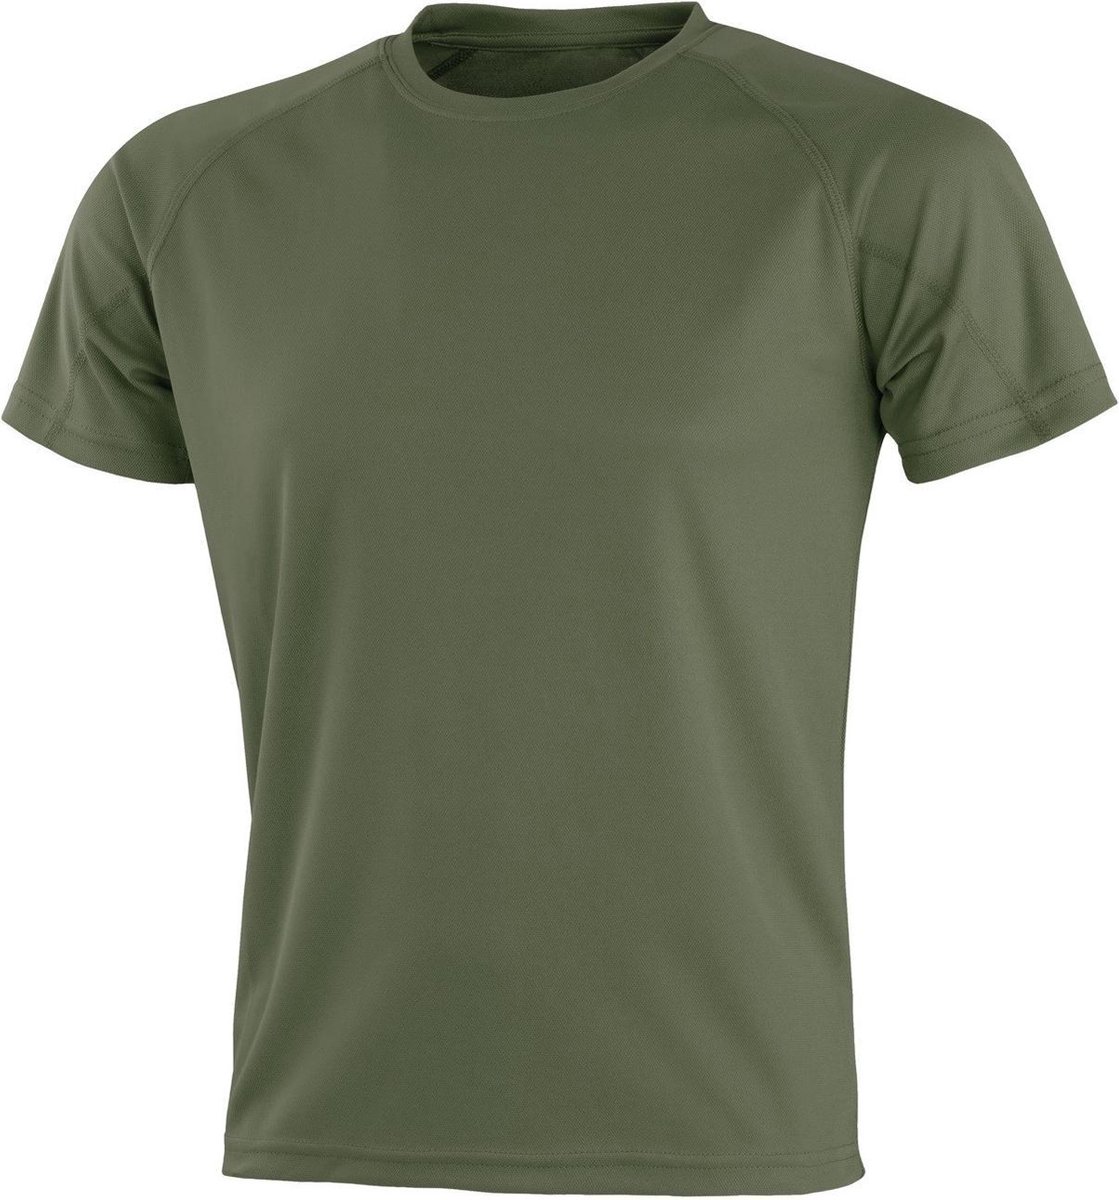 Senvi Sports Performance T-Shirt - Olive - M - Unisex